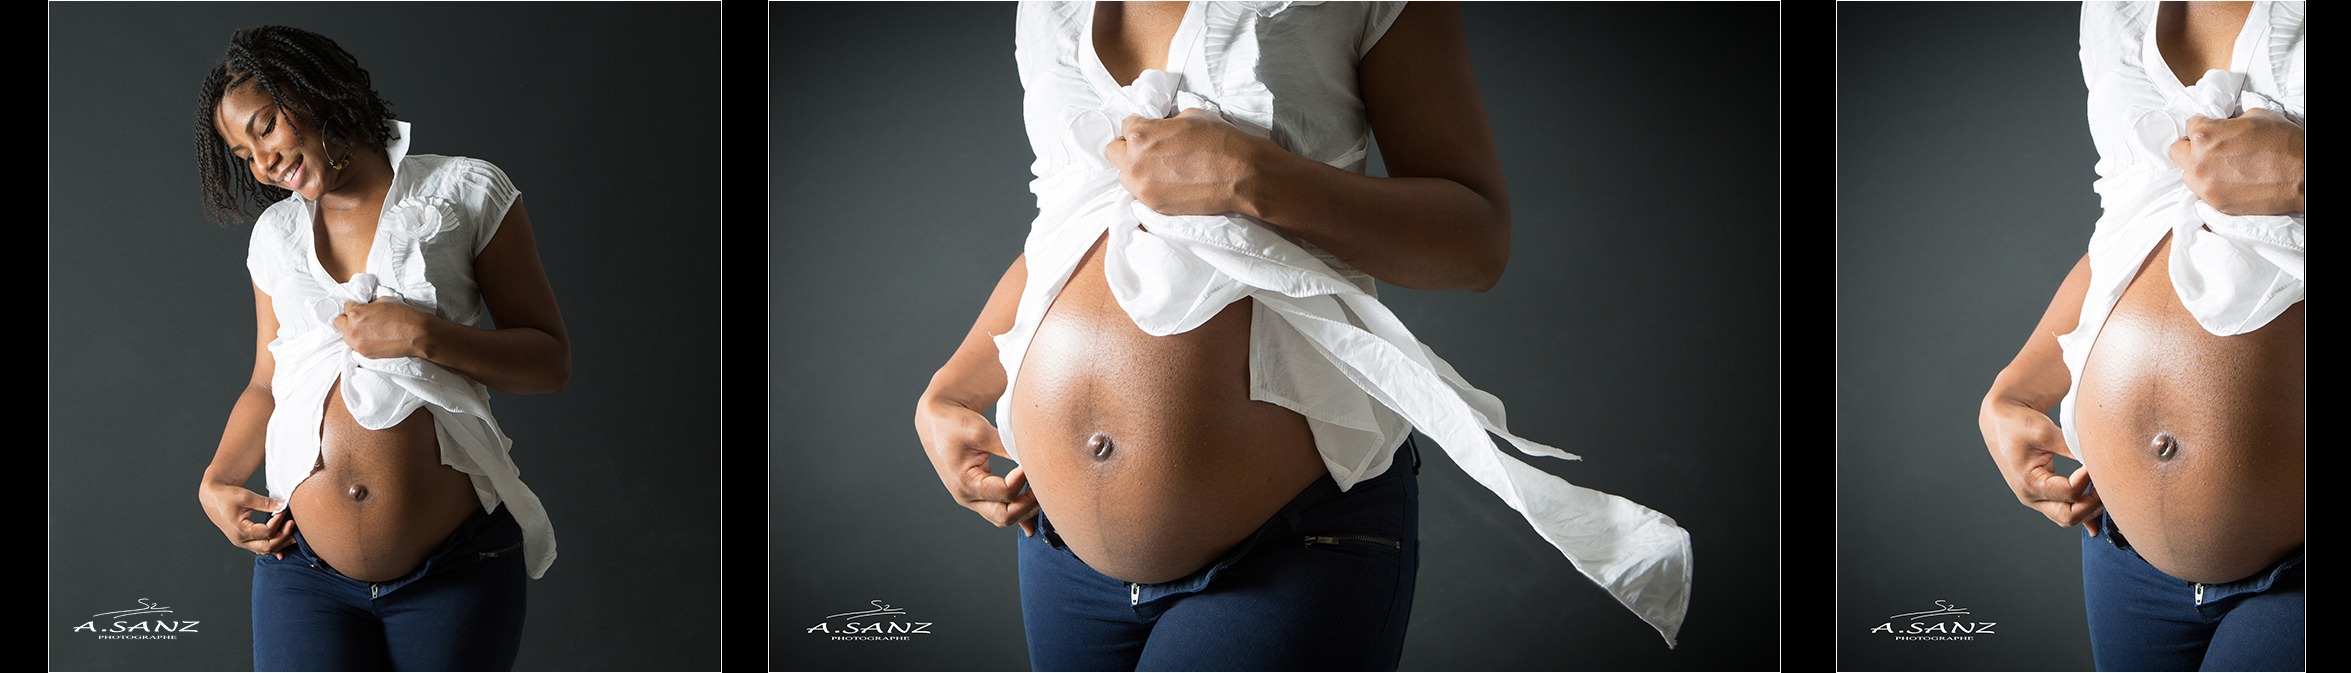 femme-enceinte-photographe-pro.jpg